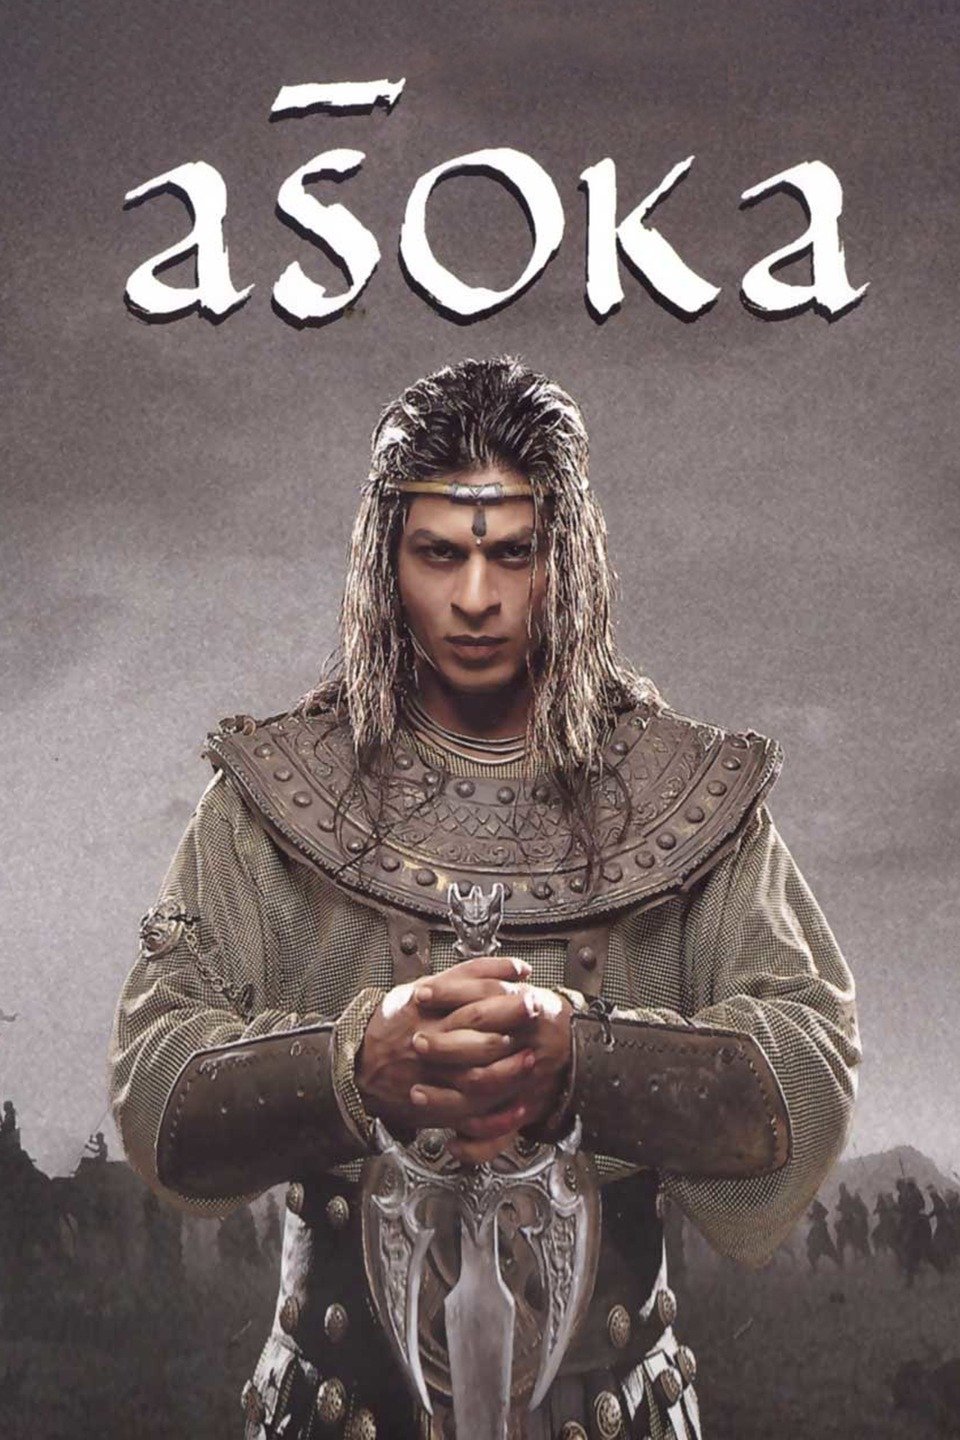 FULL MOVIE: Asoka (2001)